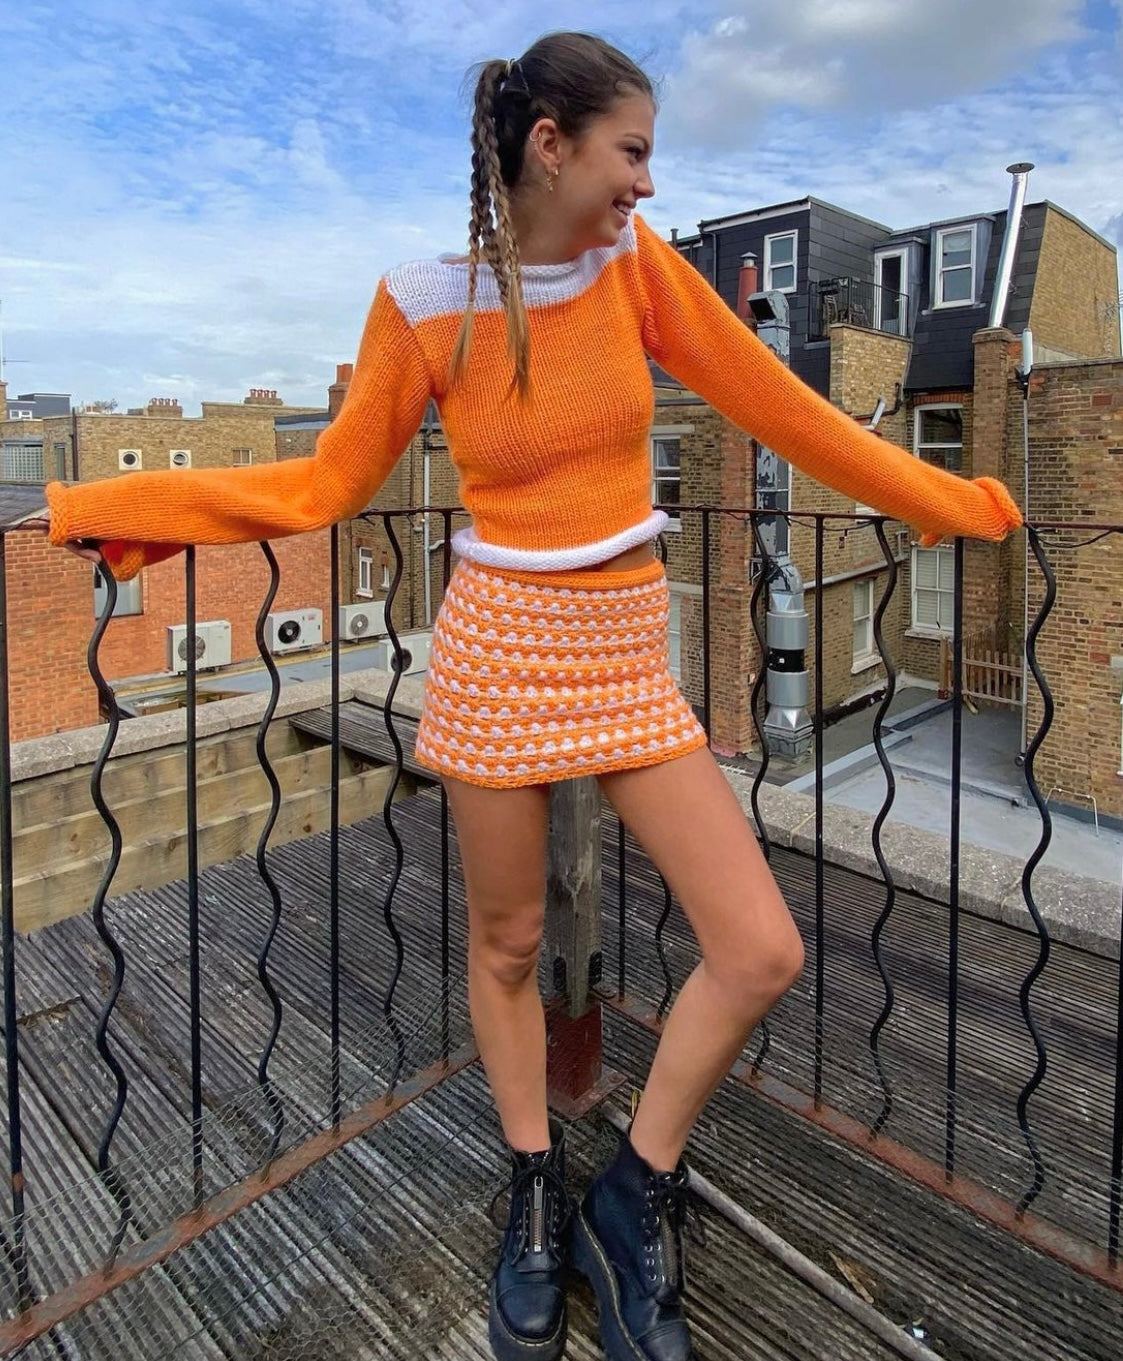 Handmade retro crochet mini skirt in orange and white